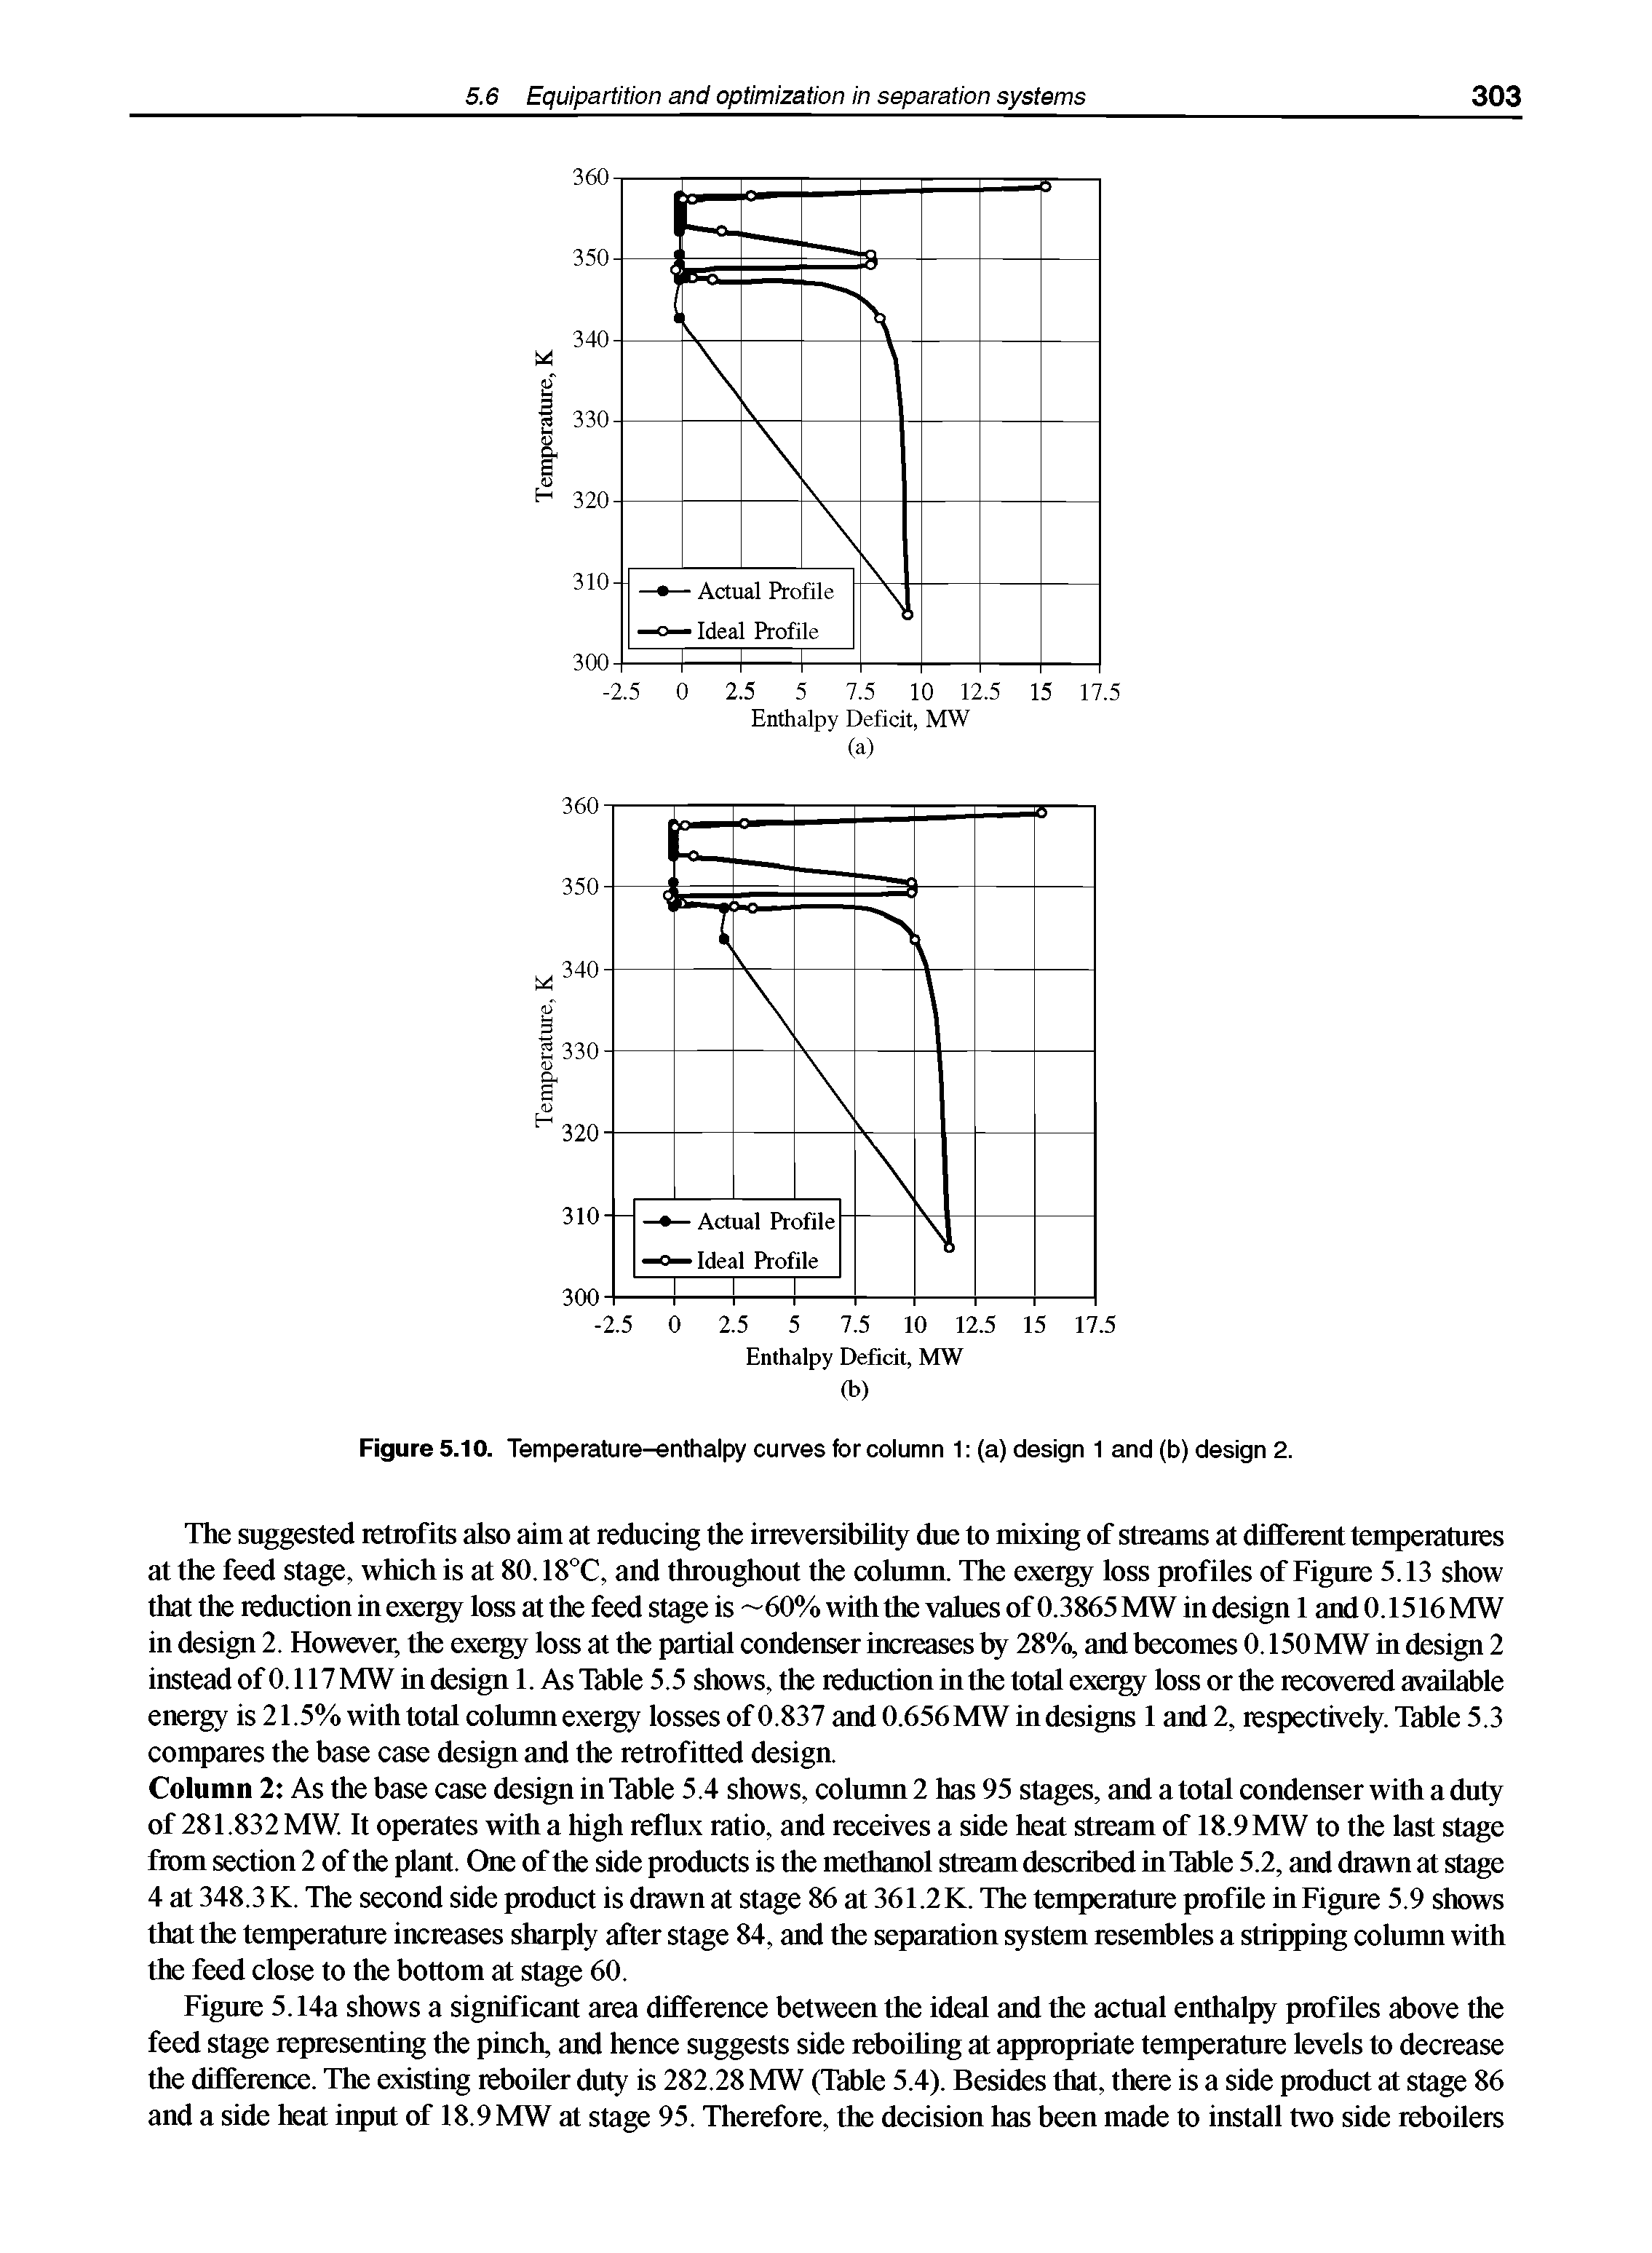 Figure 5.10. Temperature-enthalpy curves tor column 1 (a) design 1 and (b) design 2.